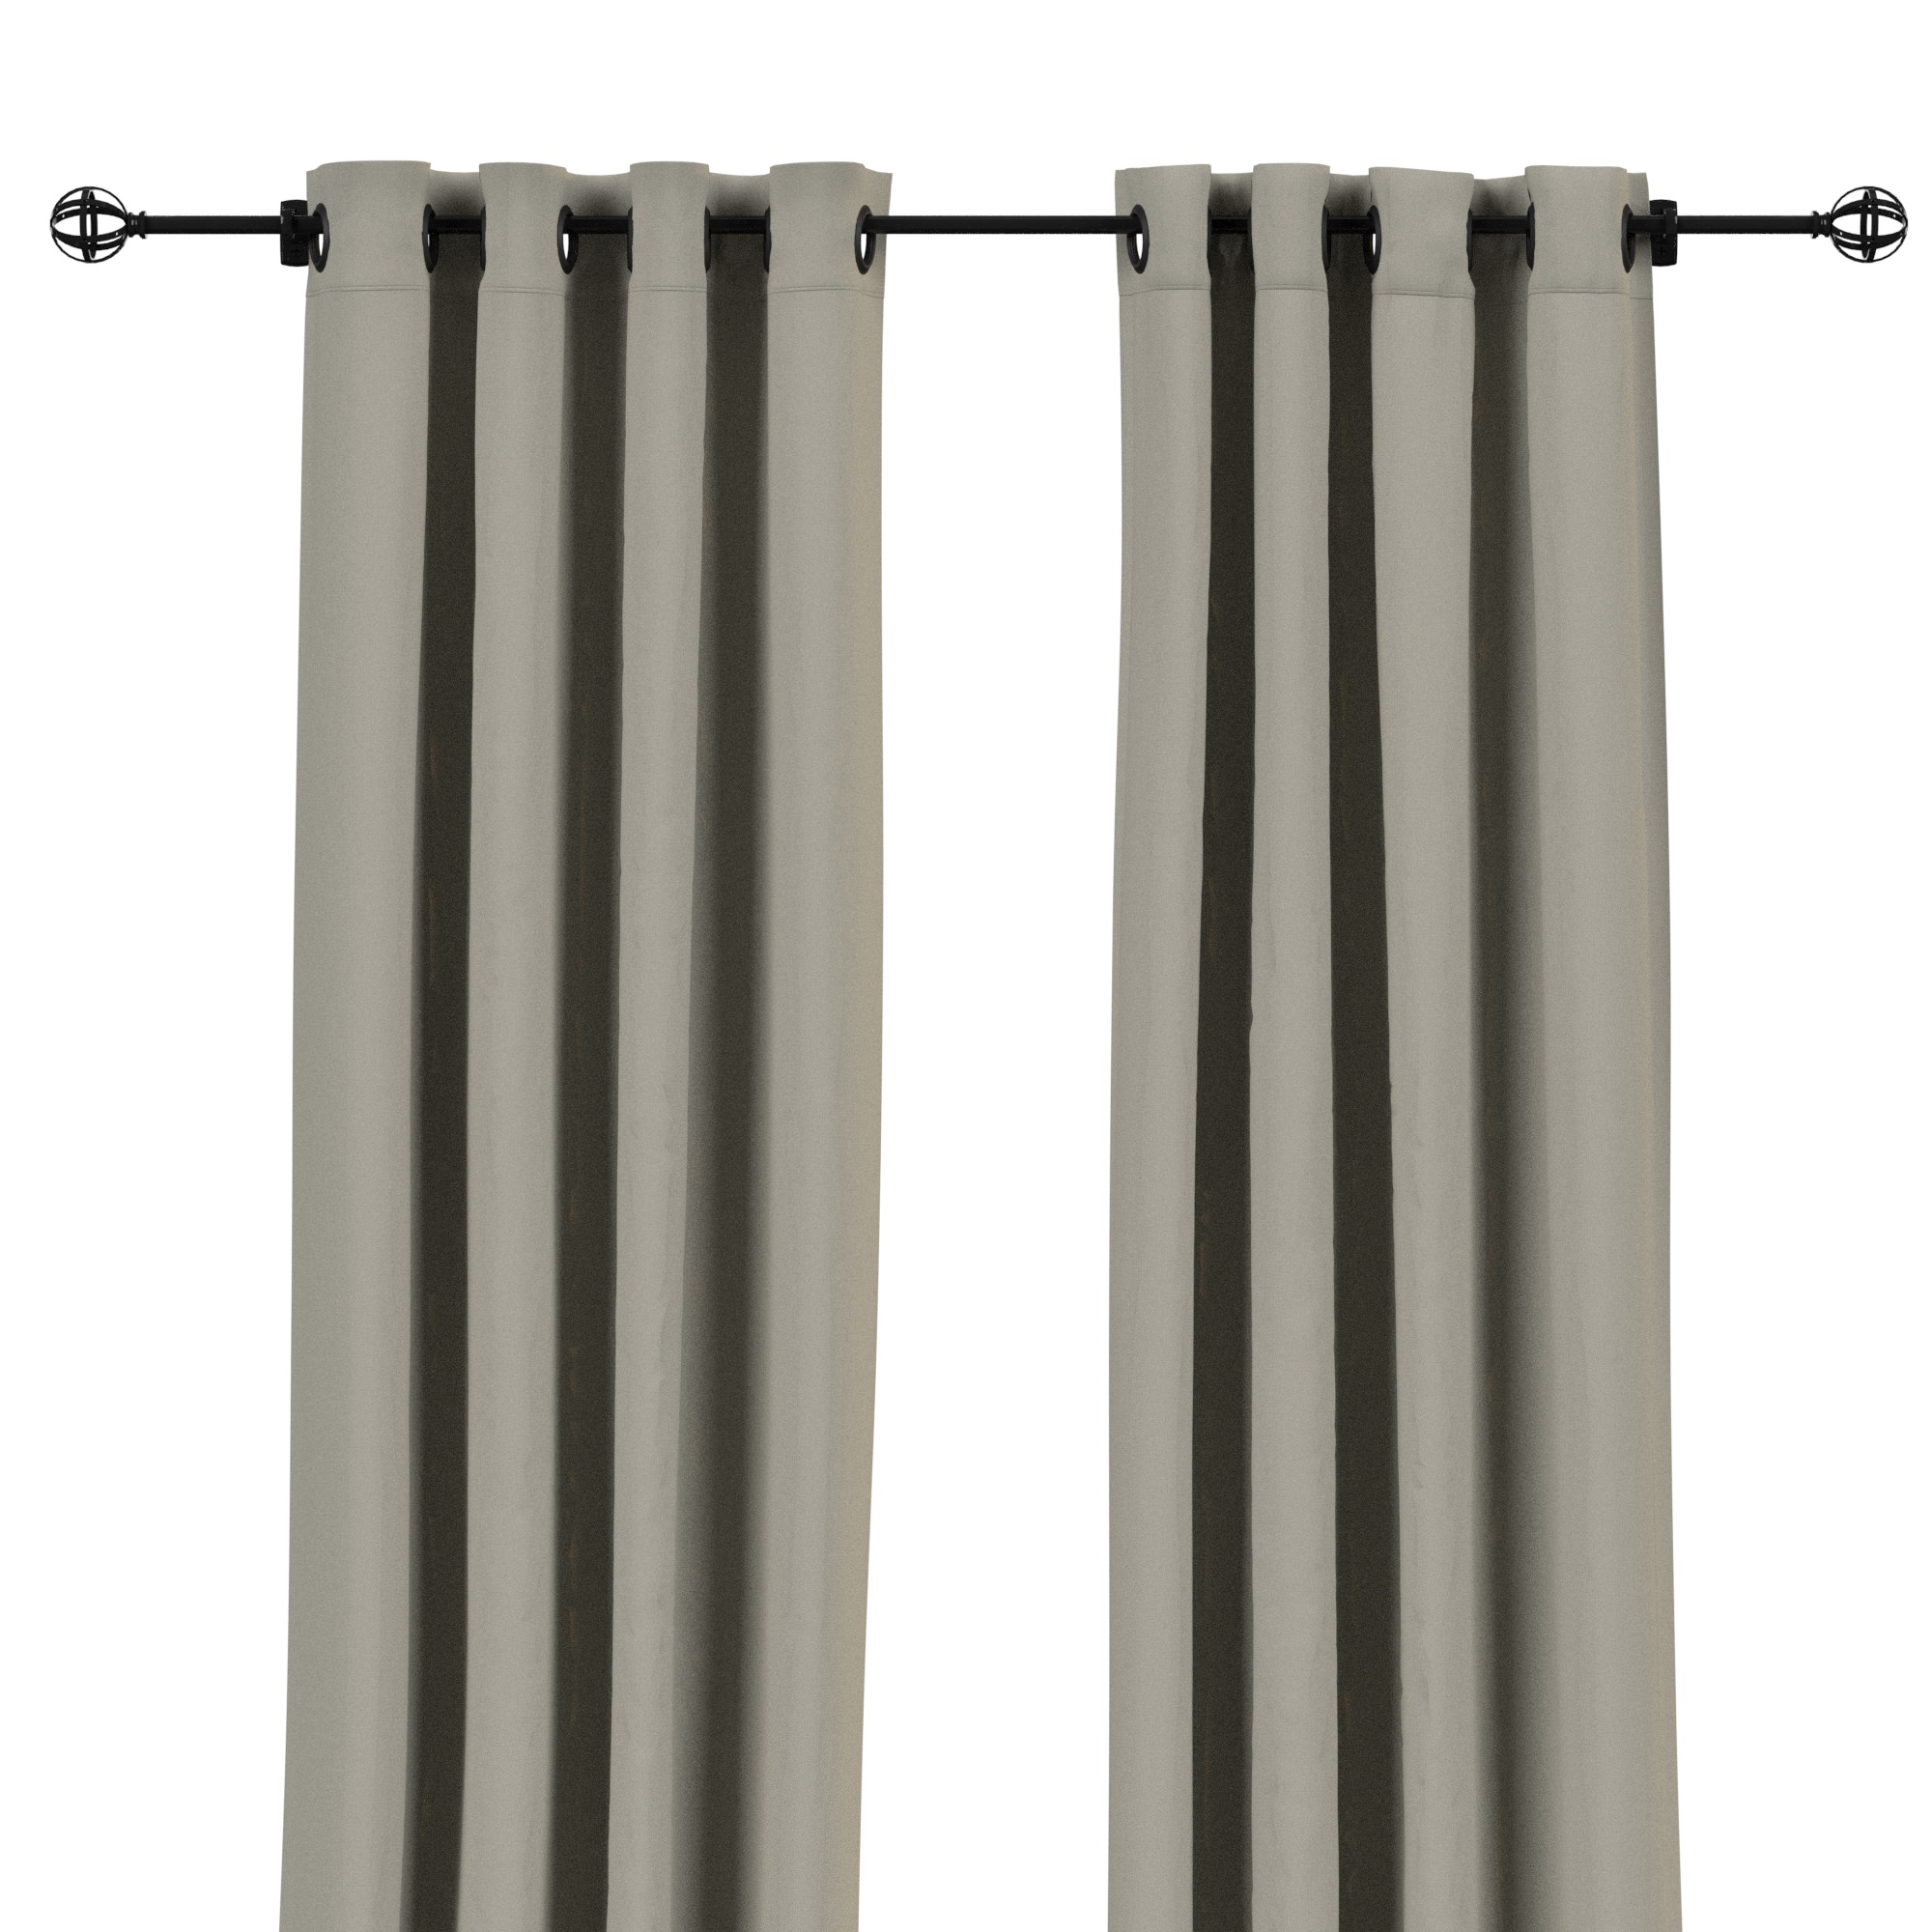 Sunbrella Spectrum Dove Outdoor Curtain with Grommets